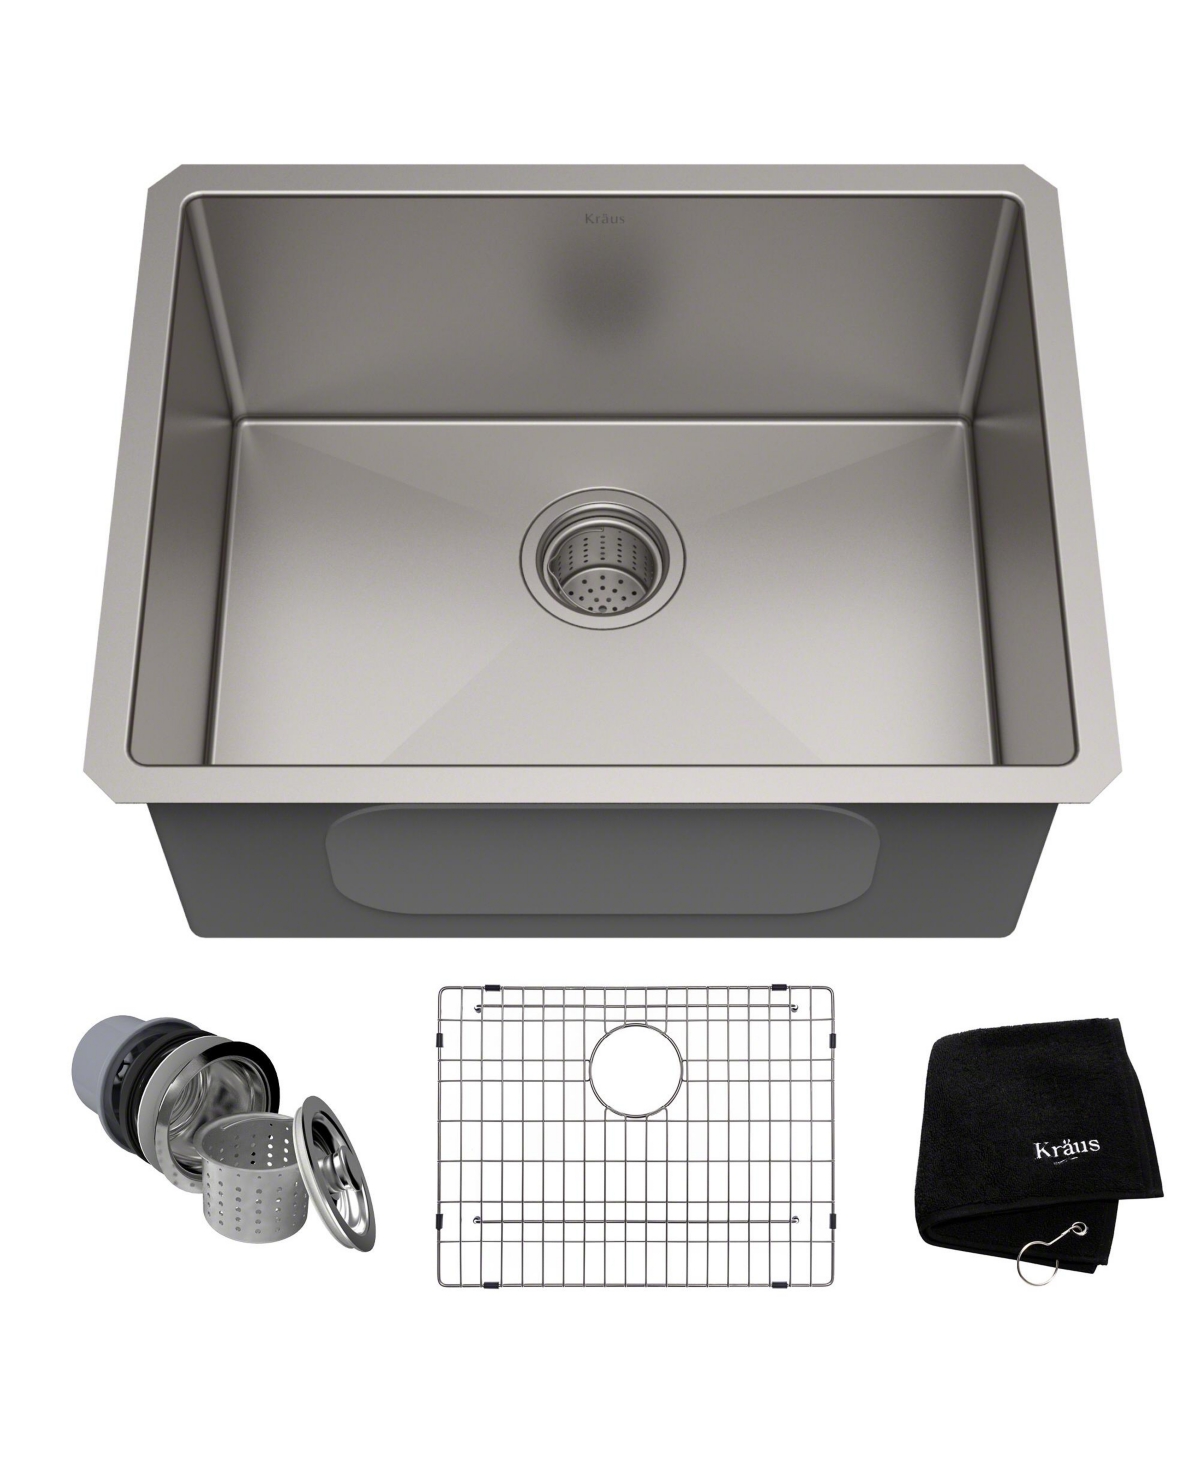 Standart Pro 23 in. 16 Gauge Undermount Single Bowl Stainless Steel Kitchen Sink - Stainless steel